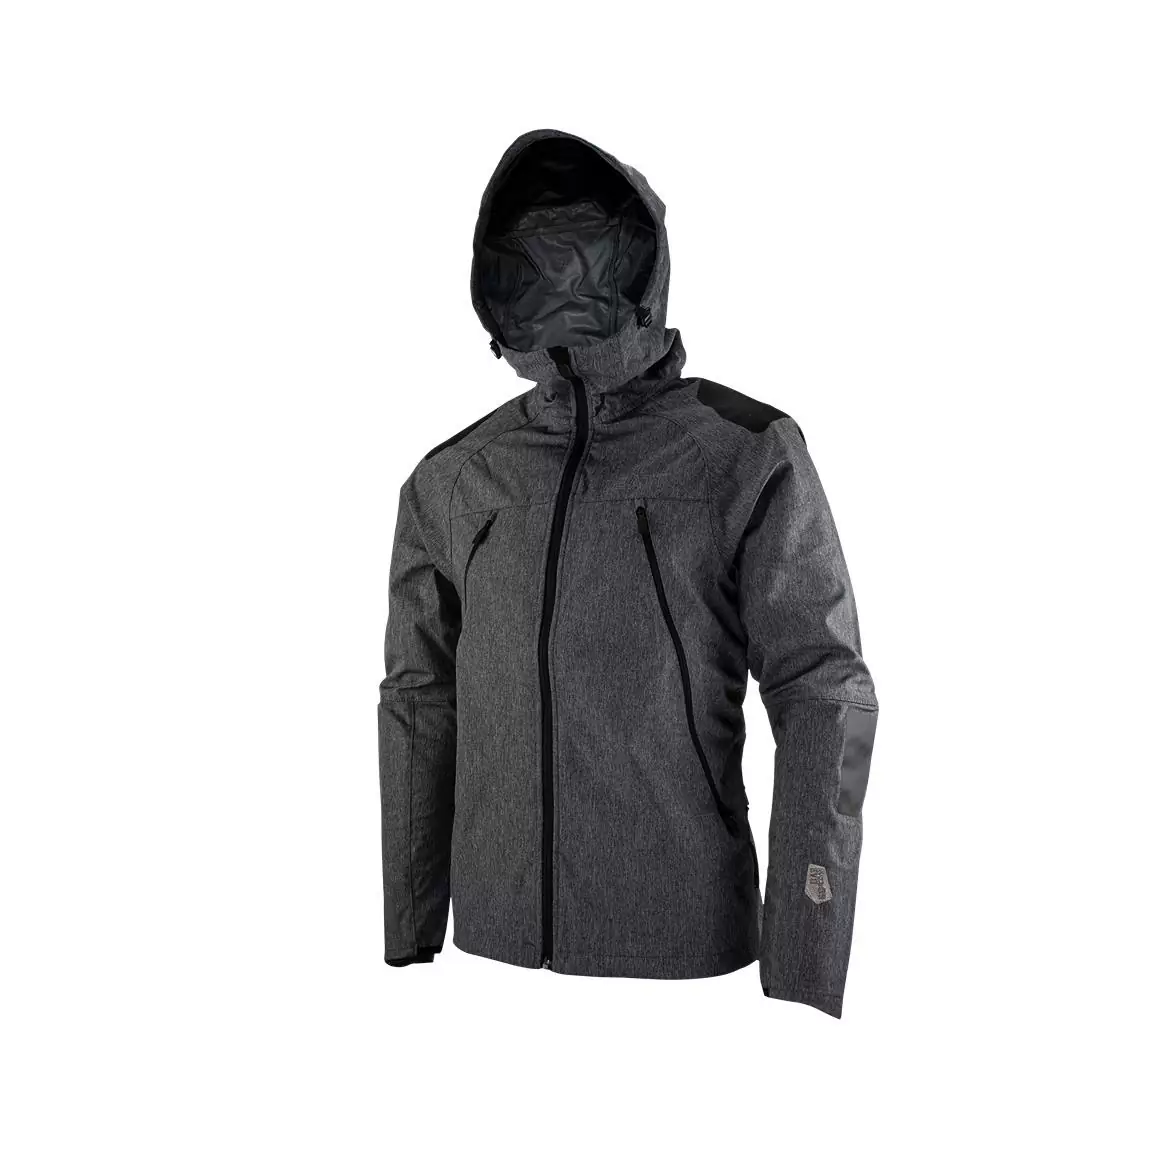 Mtb Hydradri 4.0 waterproof jacket Black size XS #2